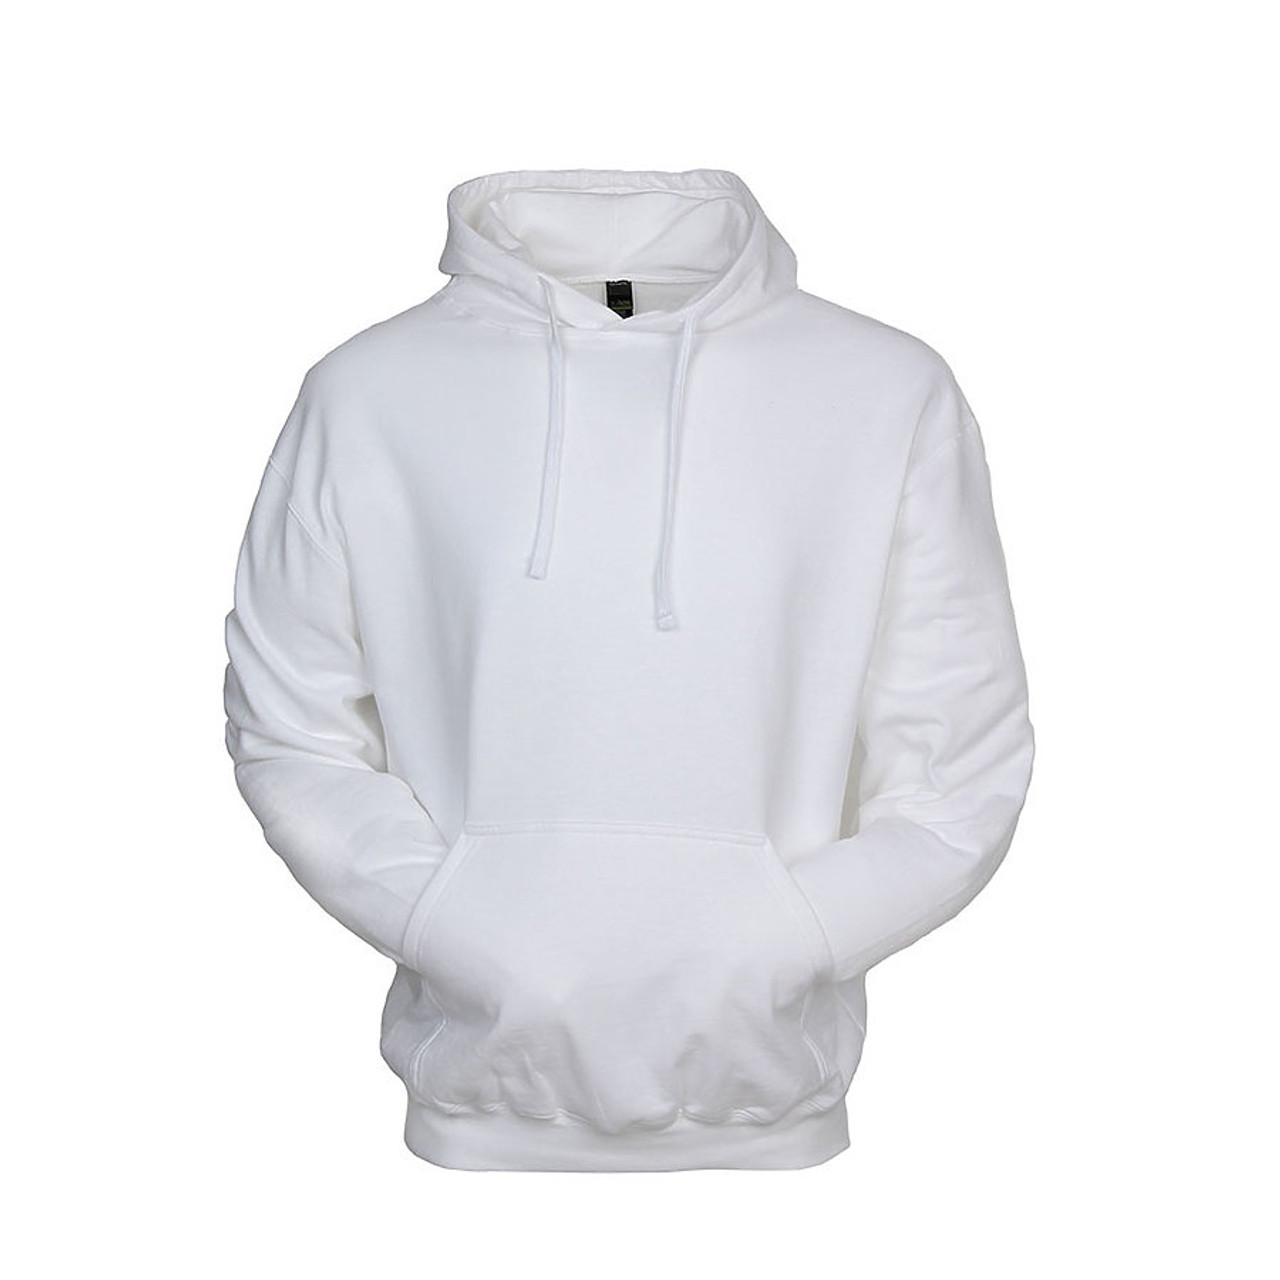 White %26 Sweatshirts & Hoodies for Sale